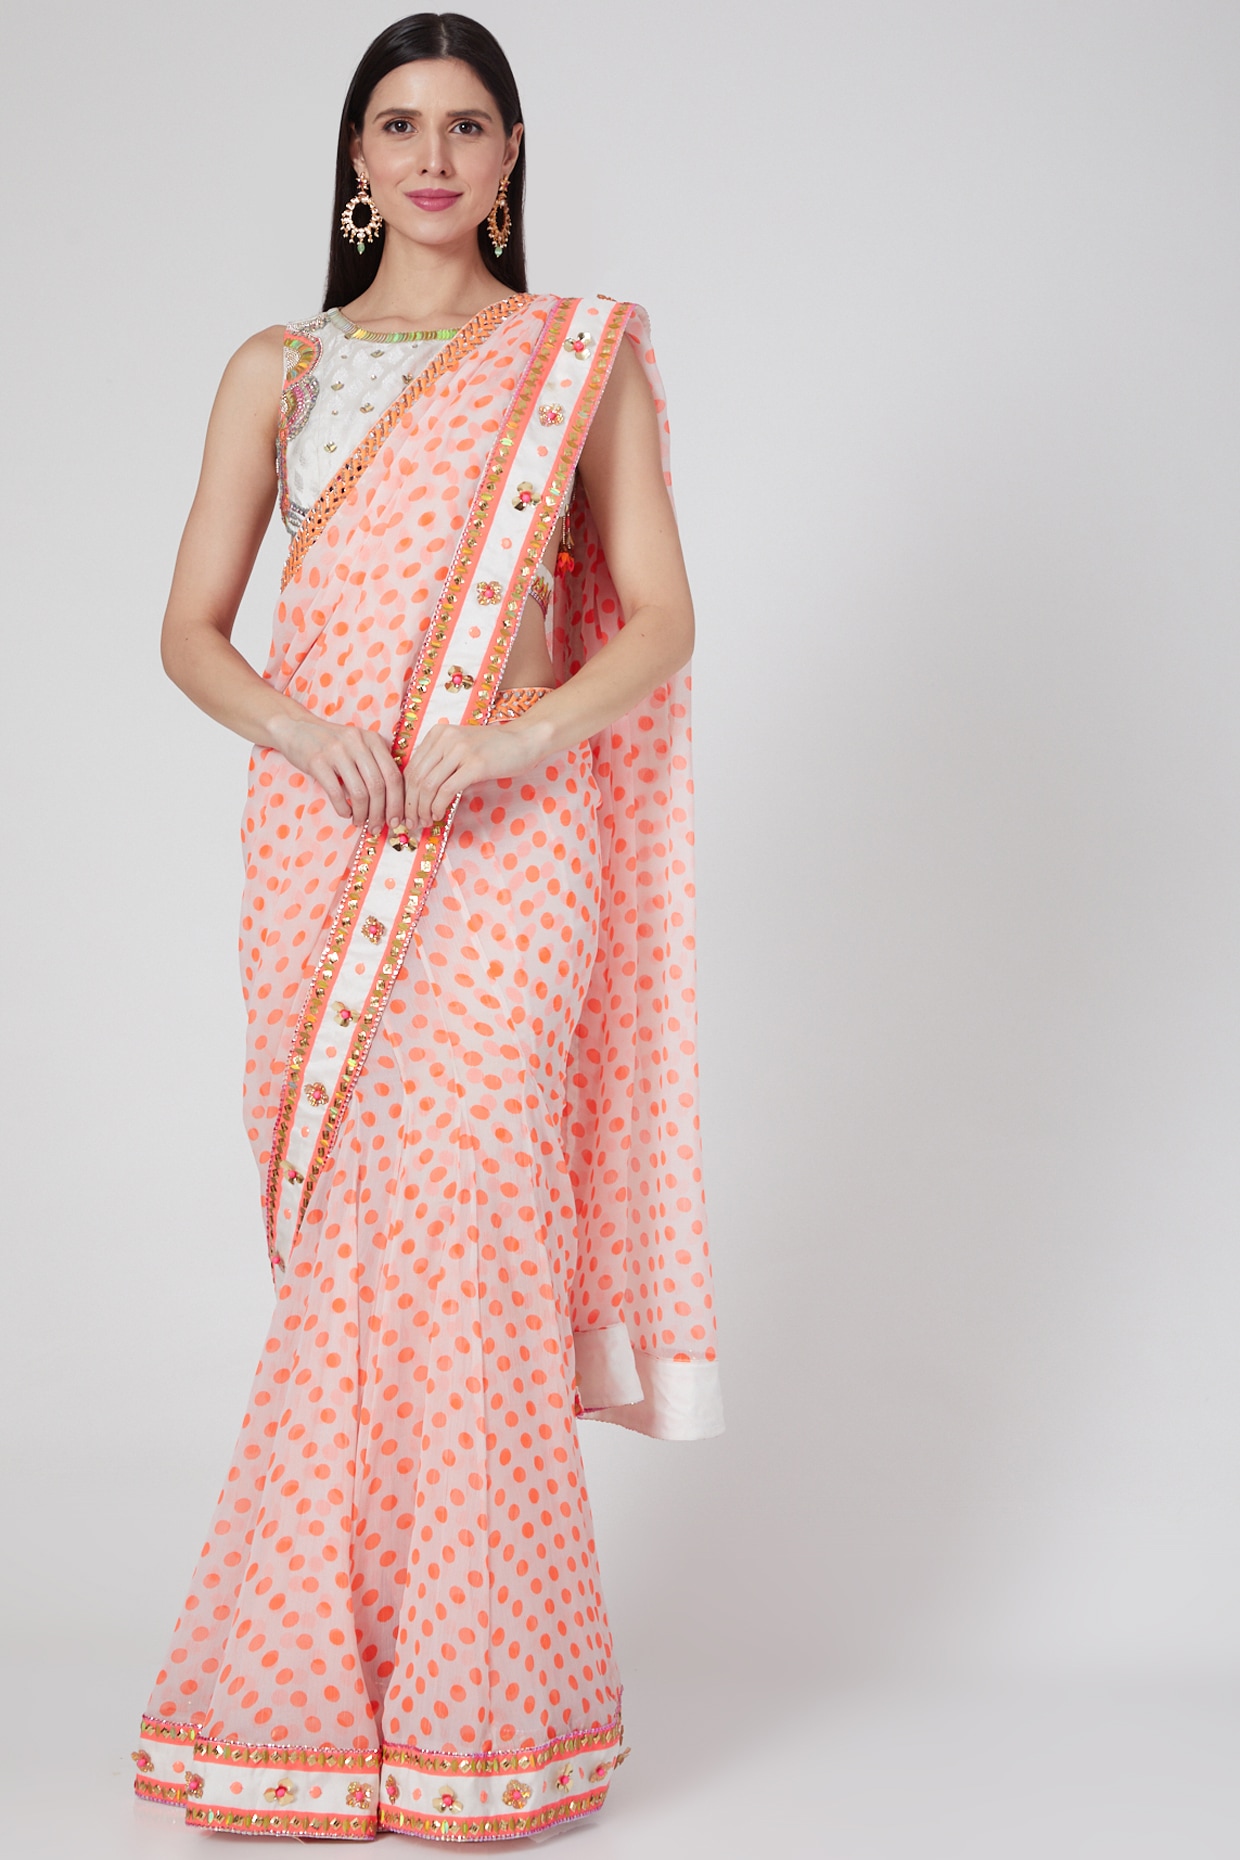 Discover more than 190 red and white lehenga saree latest